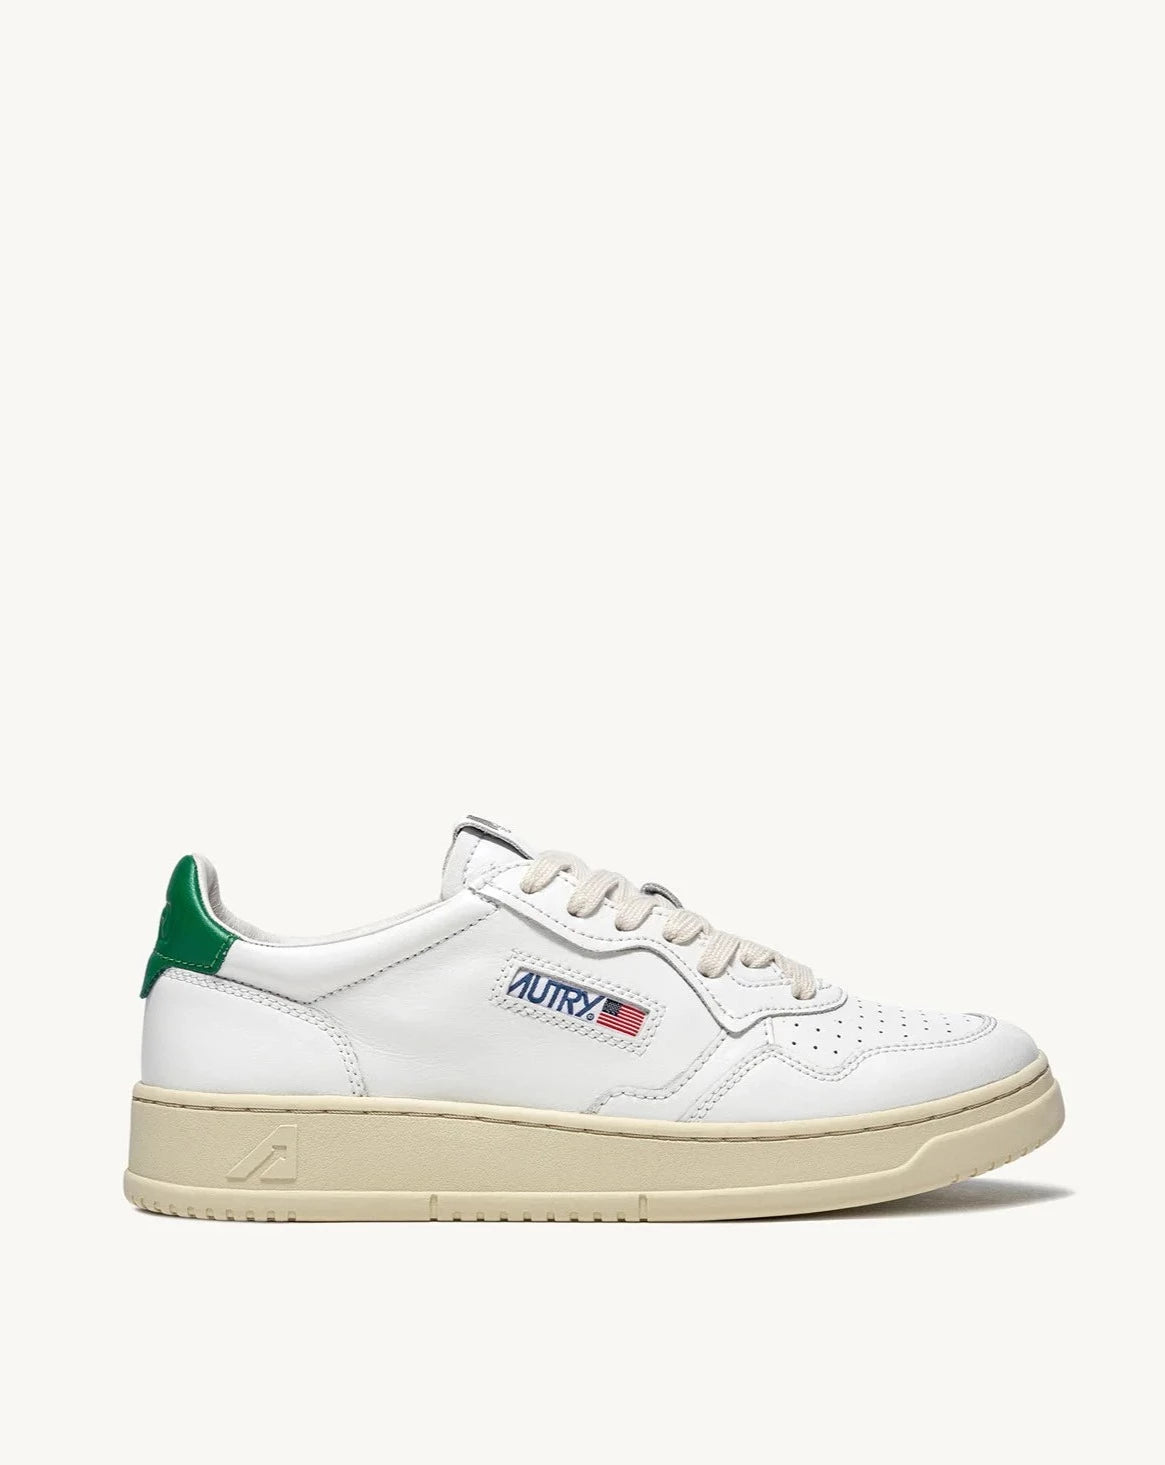 Autry LI20 White/Green sneakers